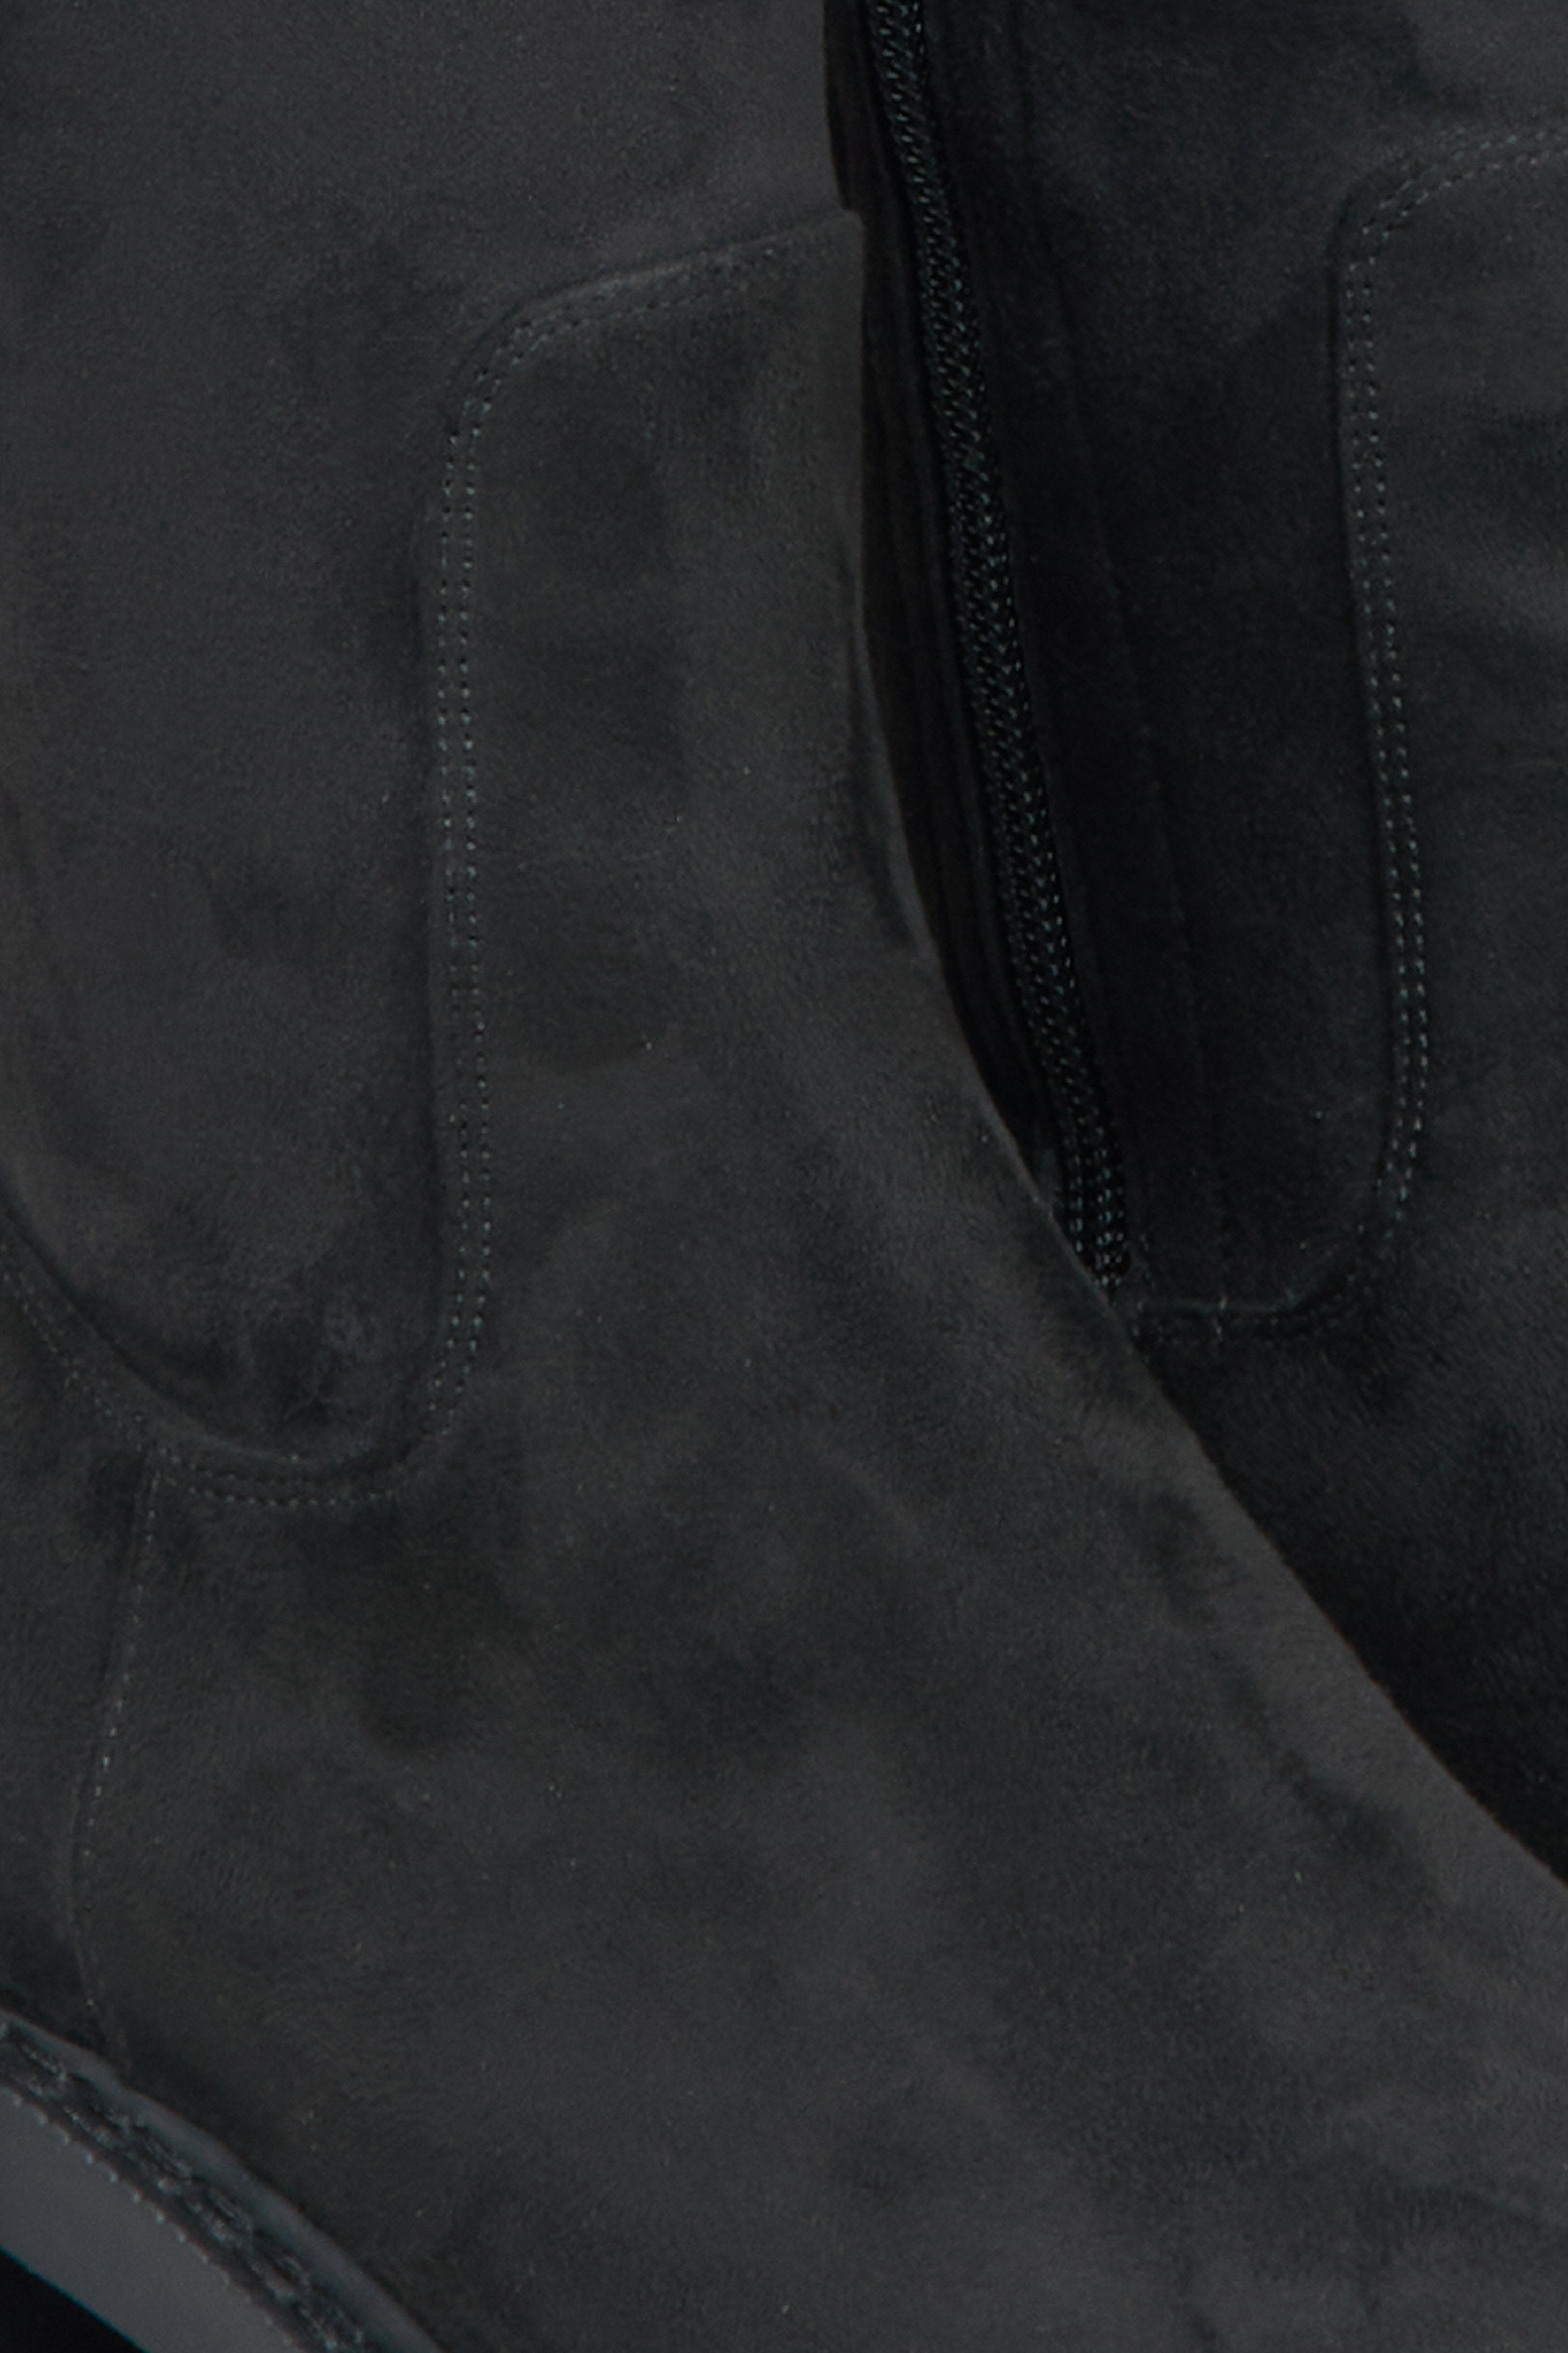 Women's black velour boots by Estro - close-up on the details.